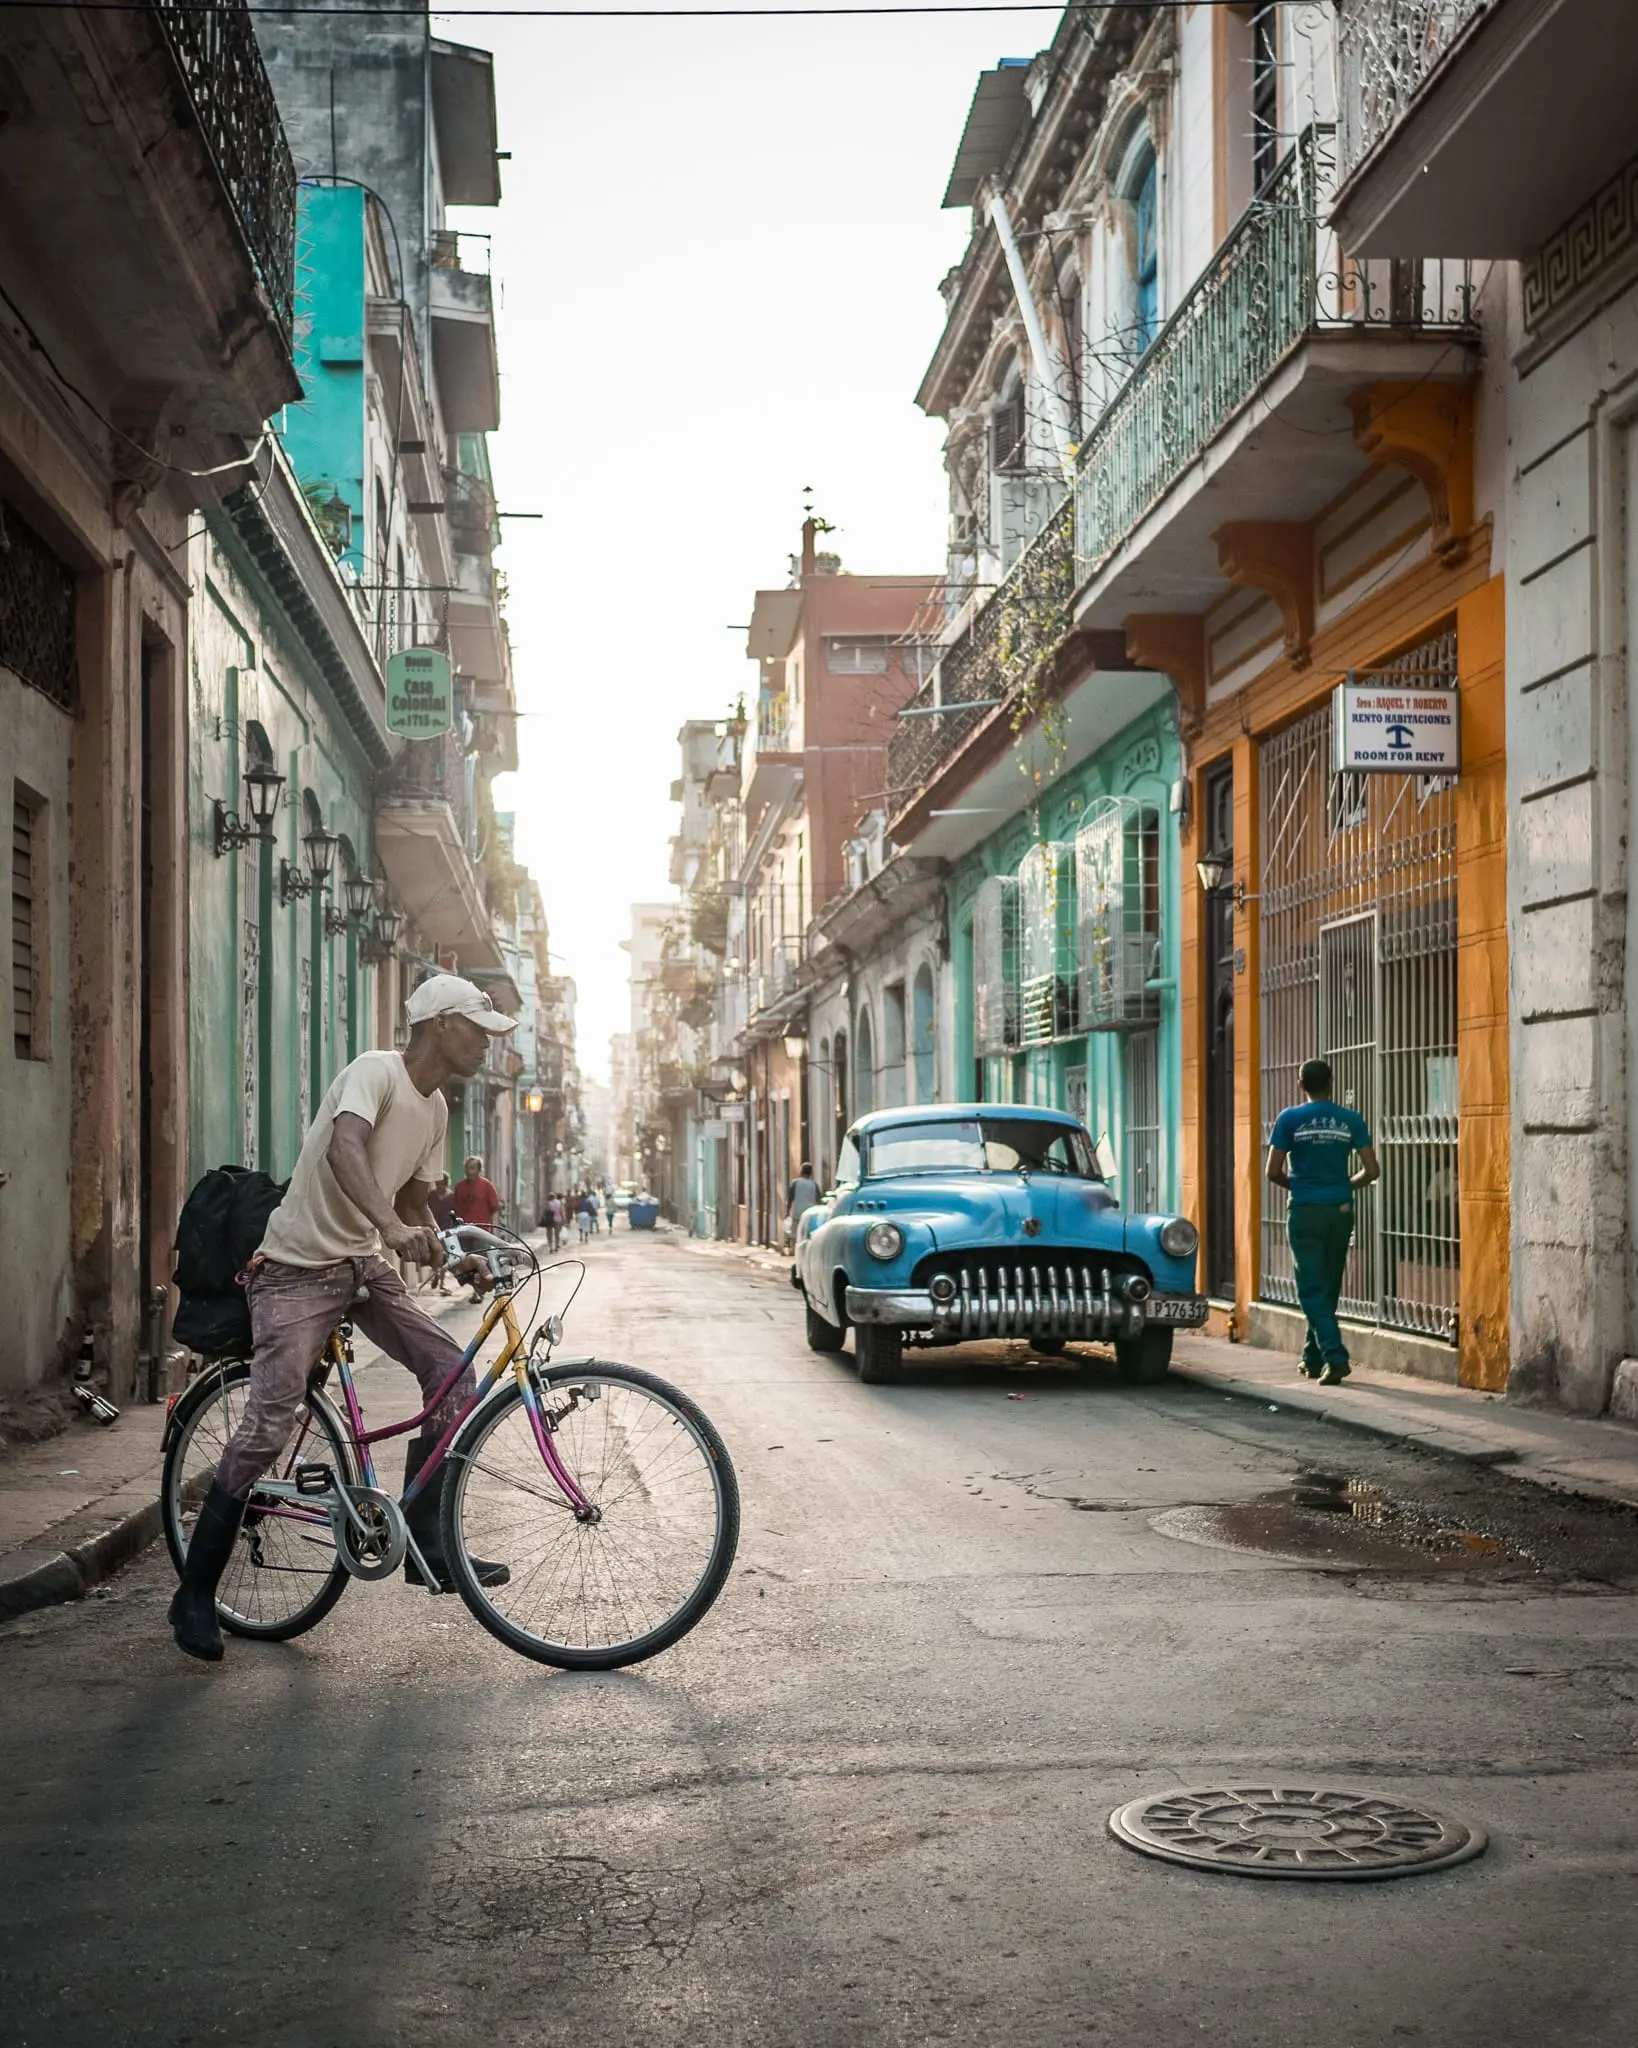 Havana Vintage Car by Joerg Nicht